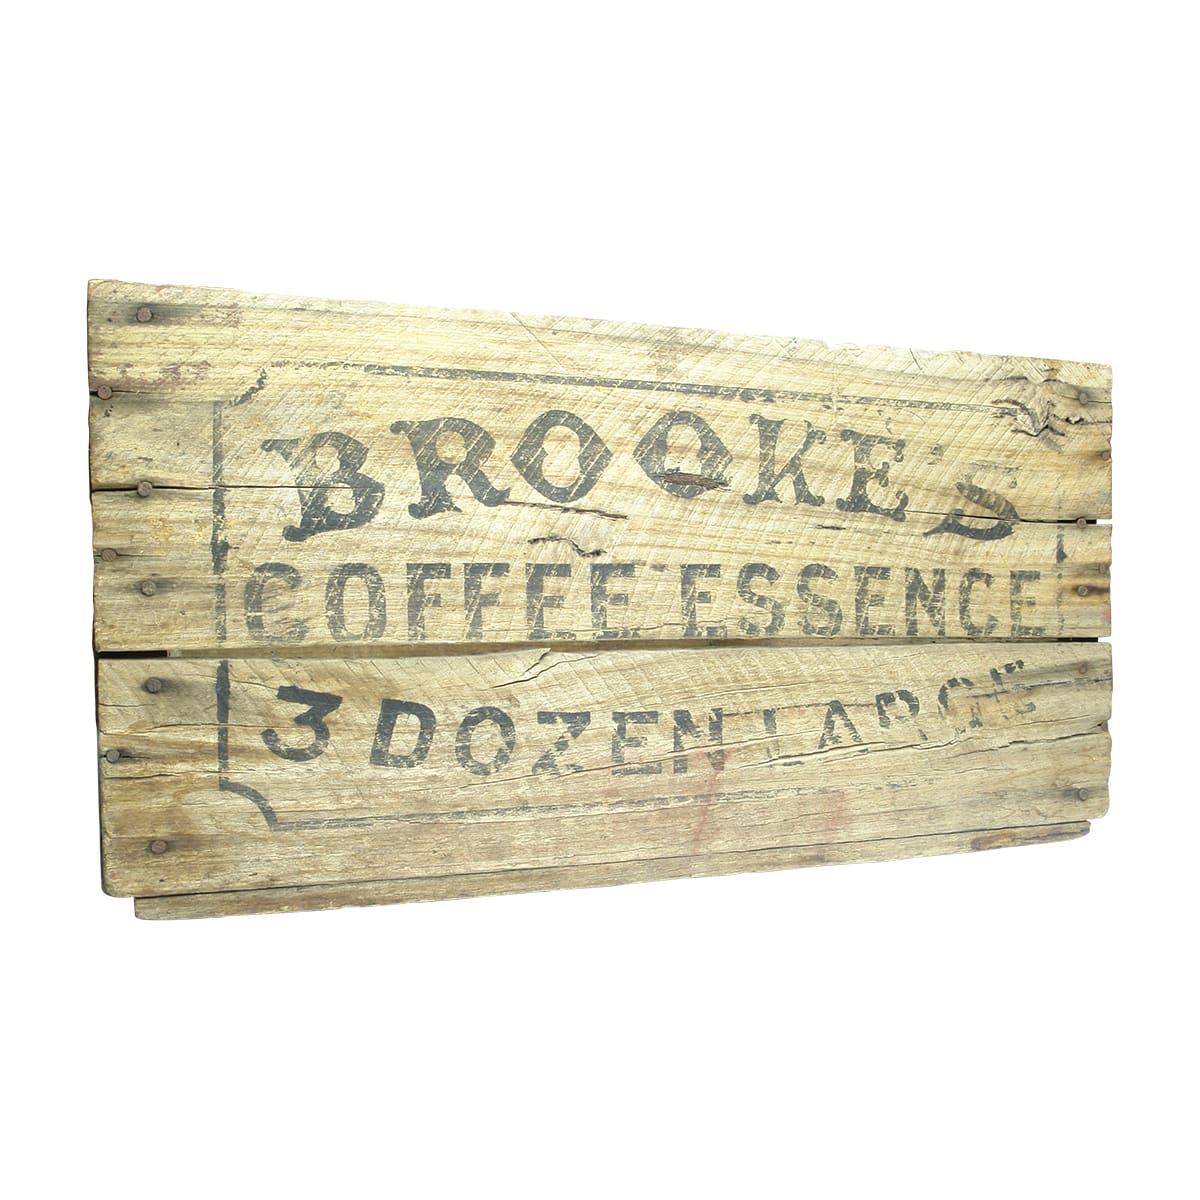 Branded Wooden Box. Brooke's Coffee Essence.